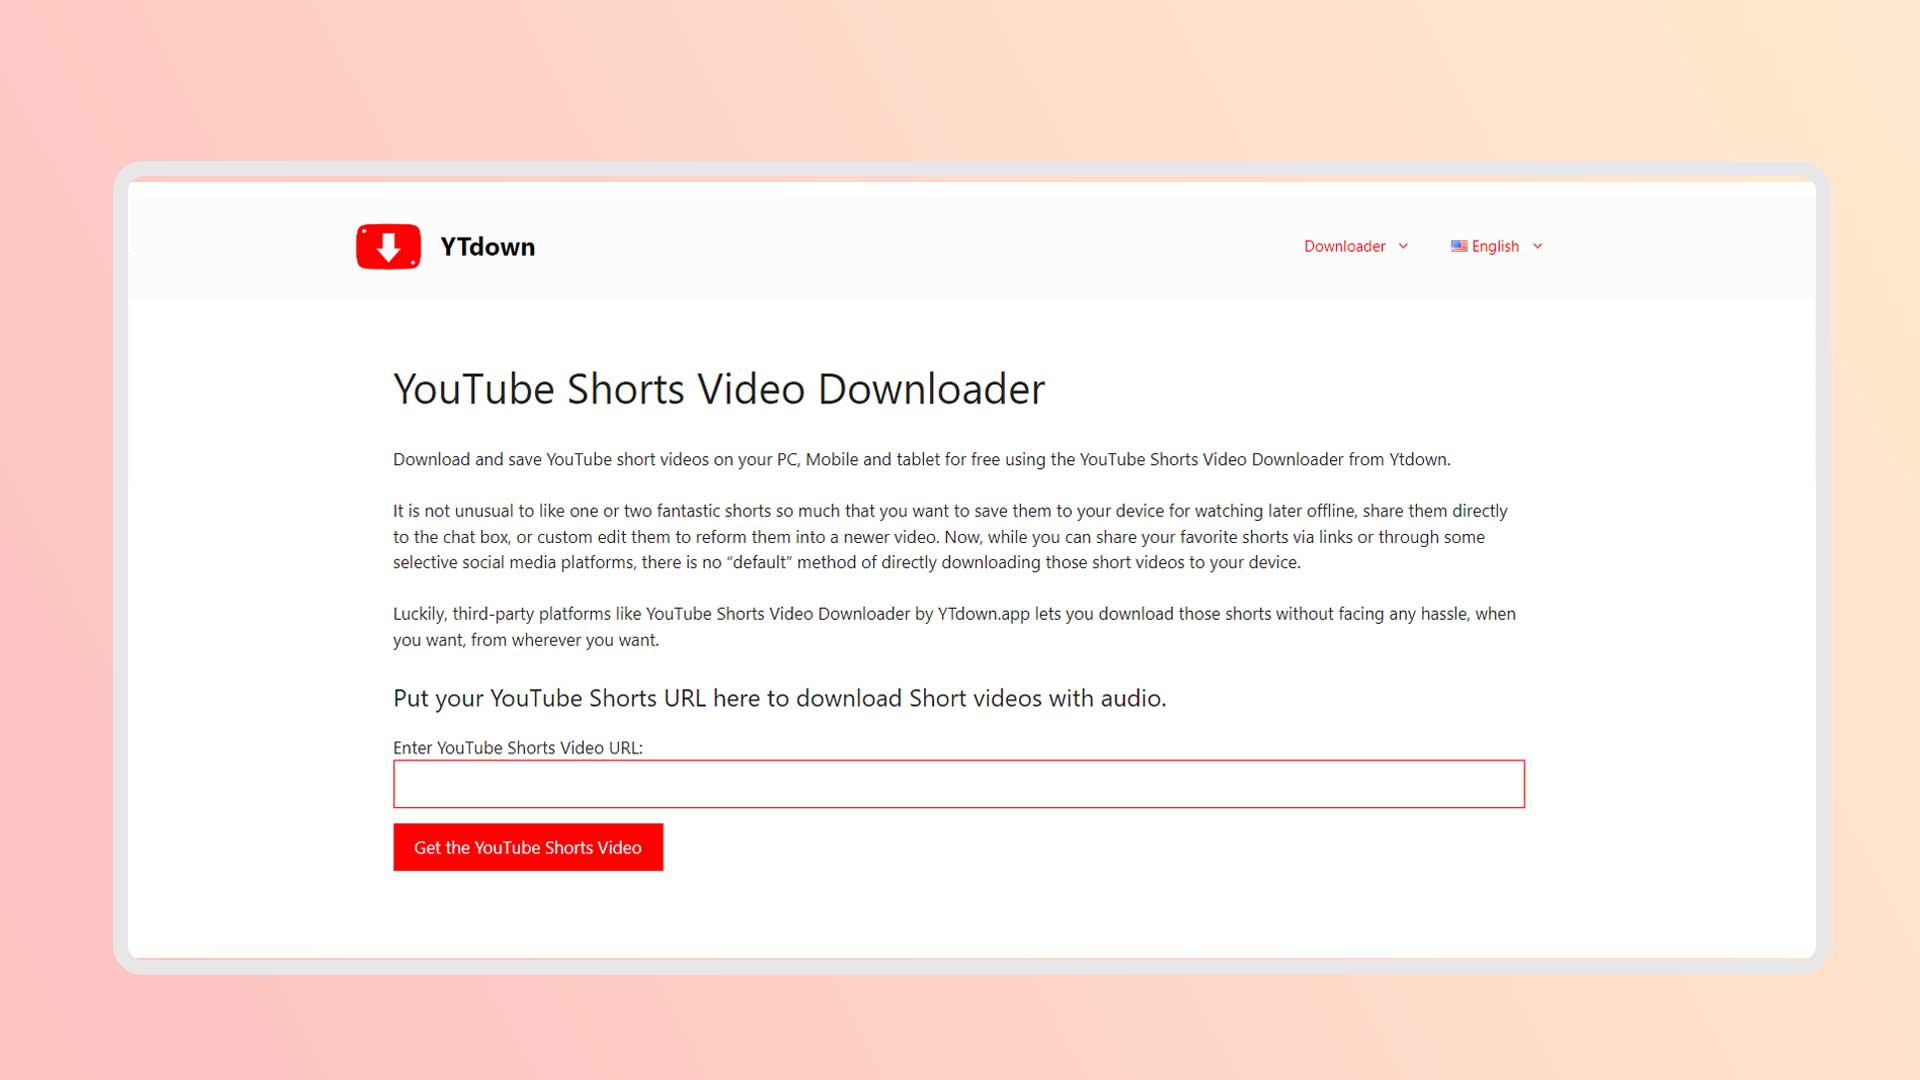 YTdown Ytdown - YouTube Shorts Video Downloader